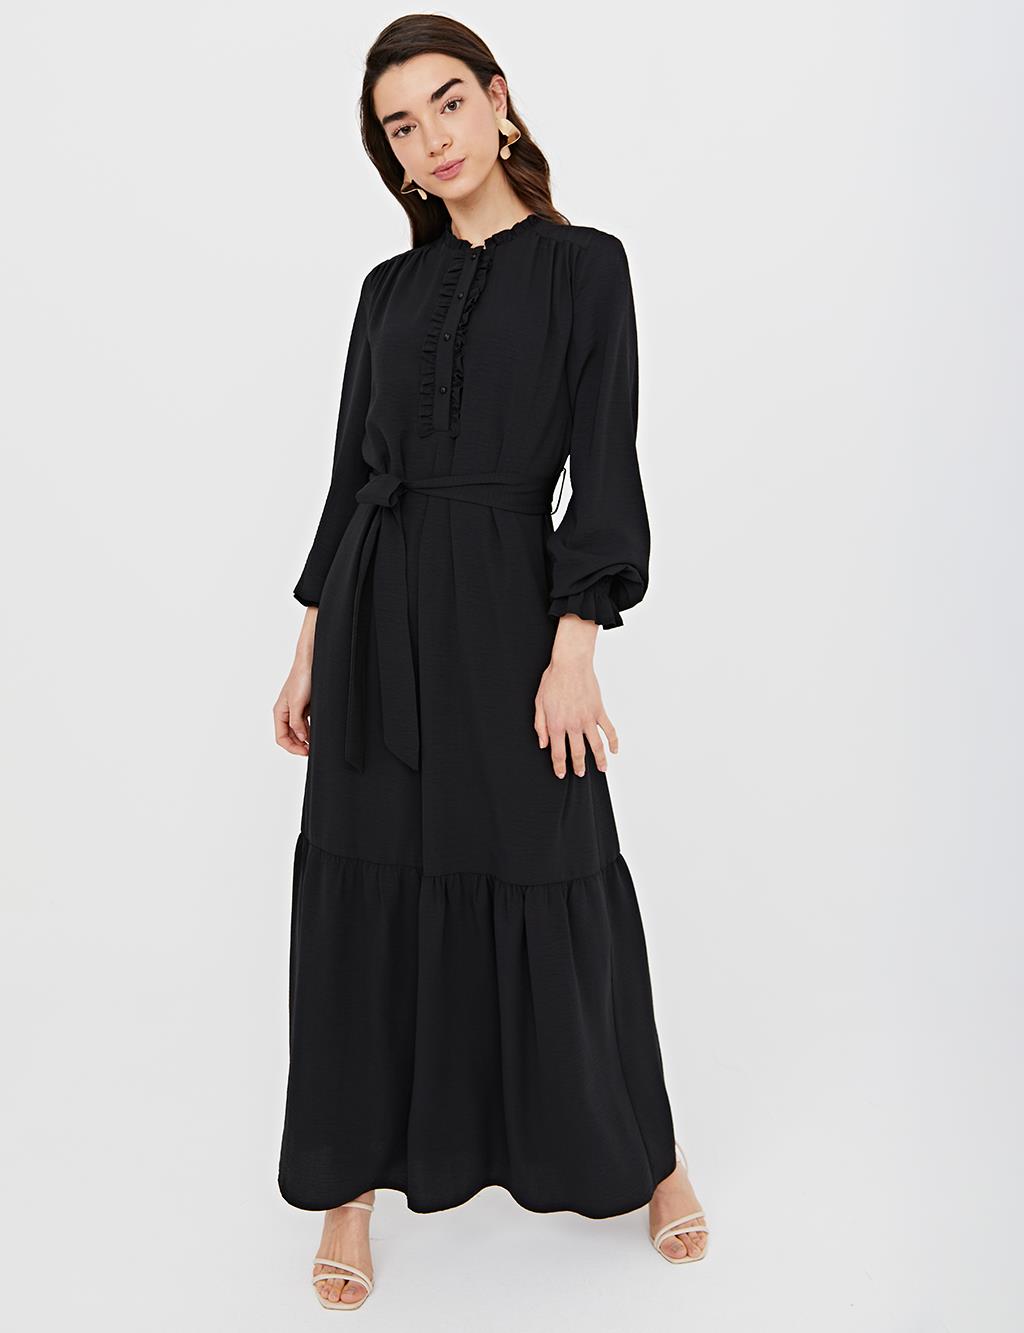 KYR Belted Frilly Dress B21 83006 Black